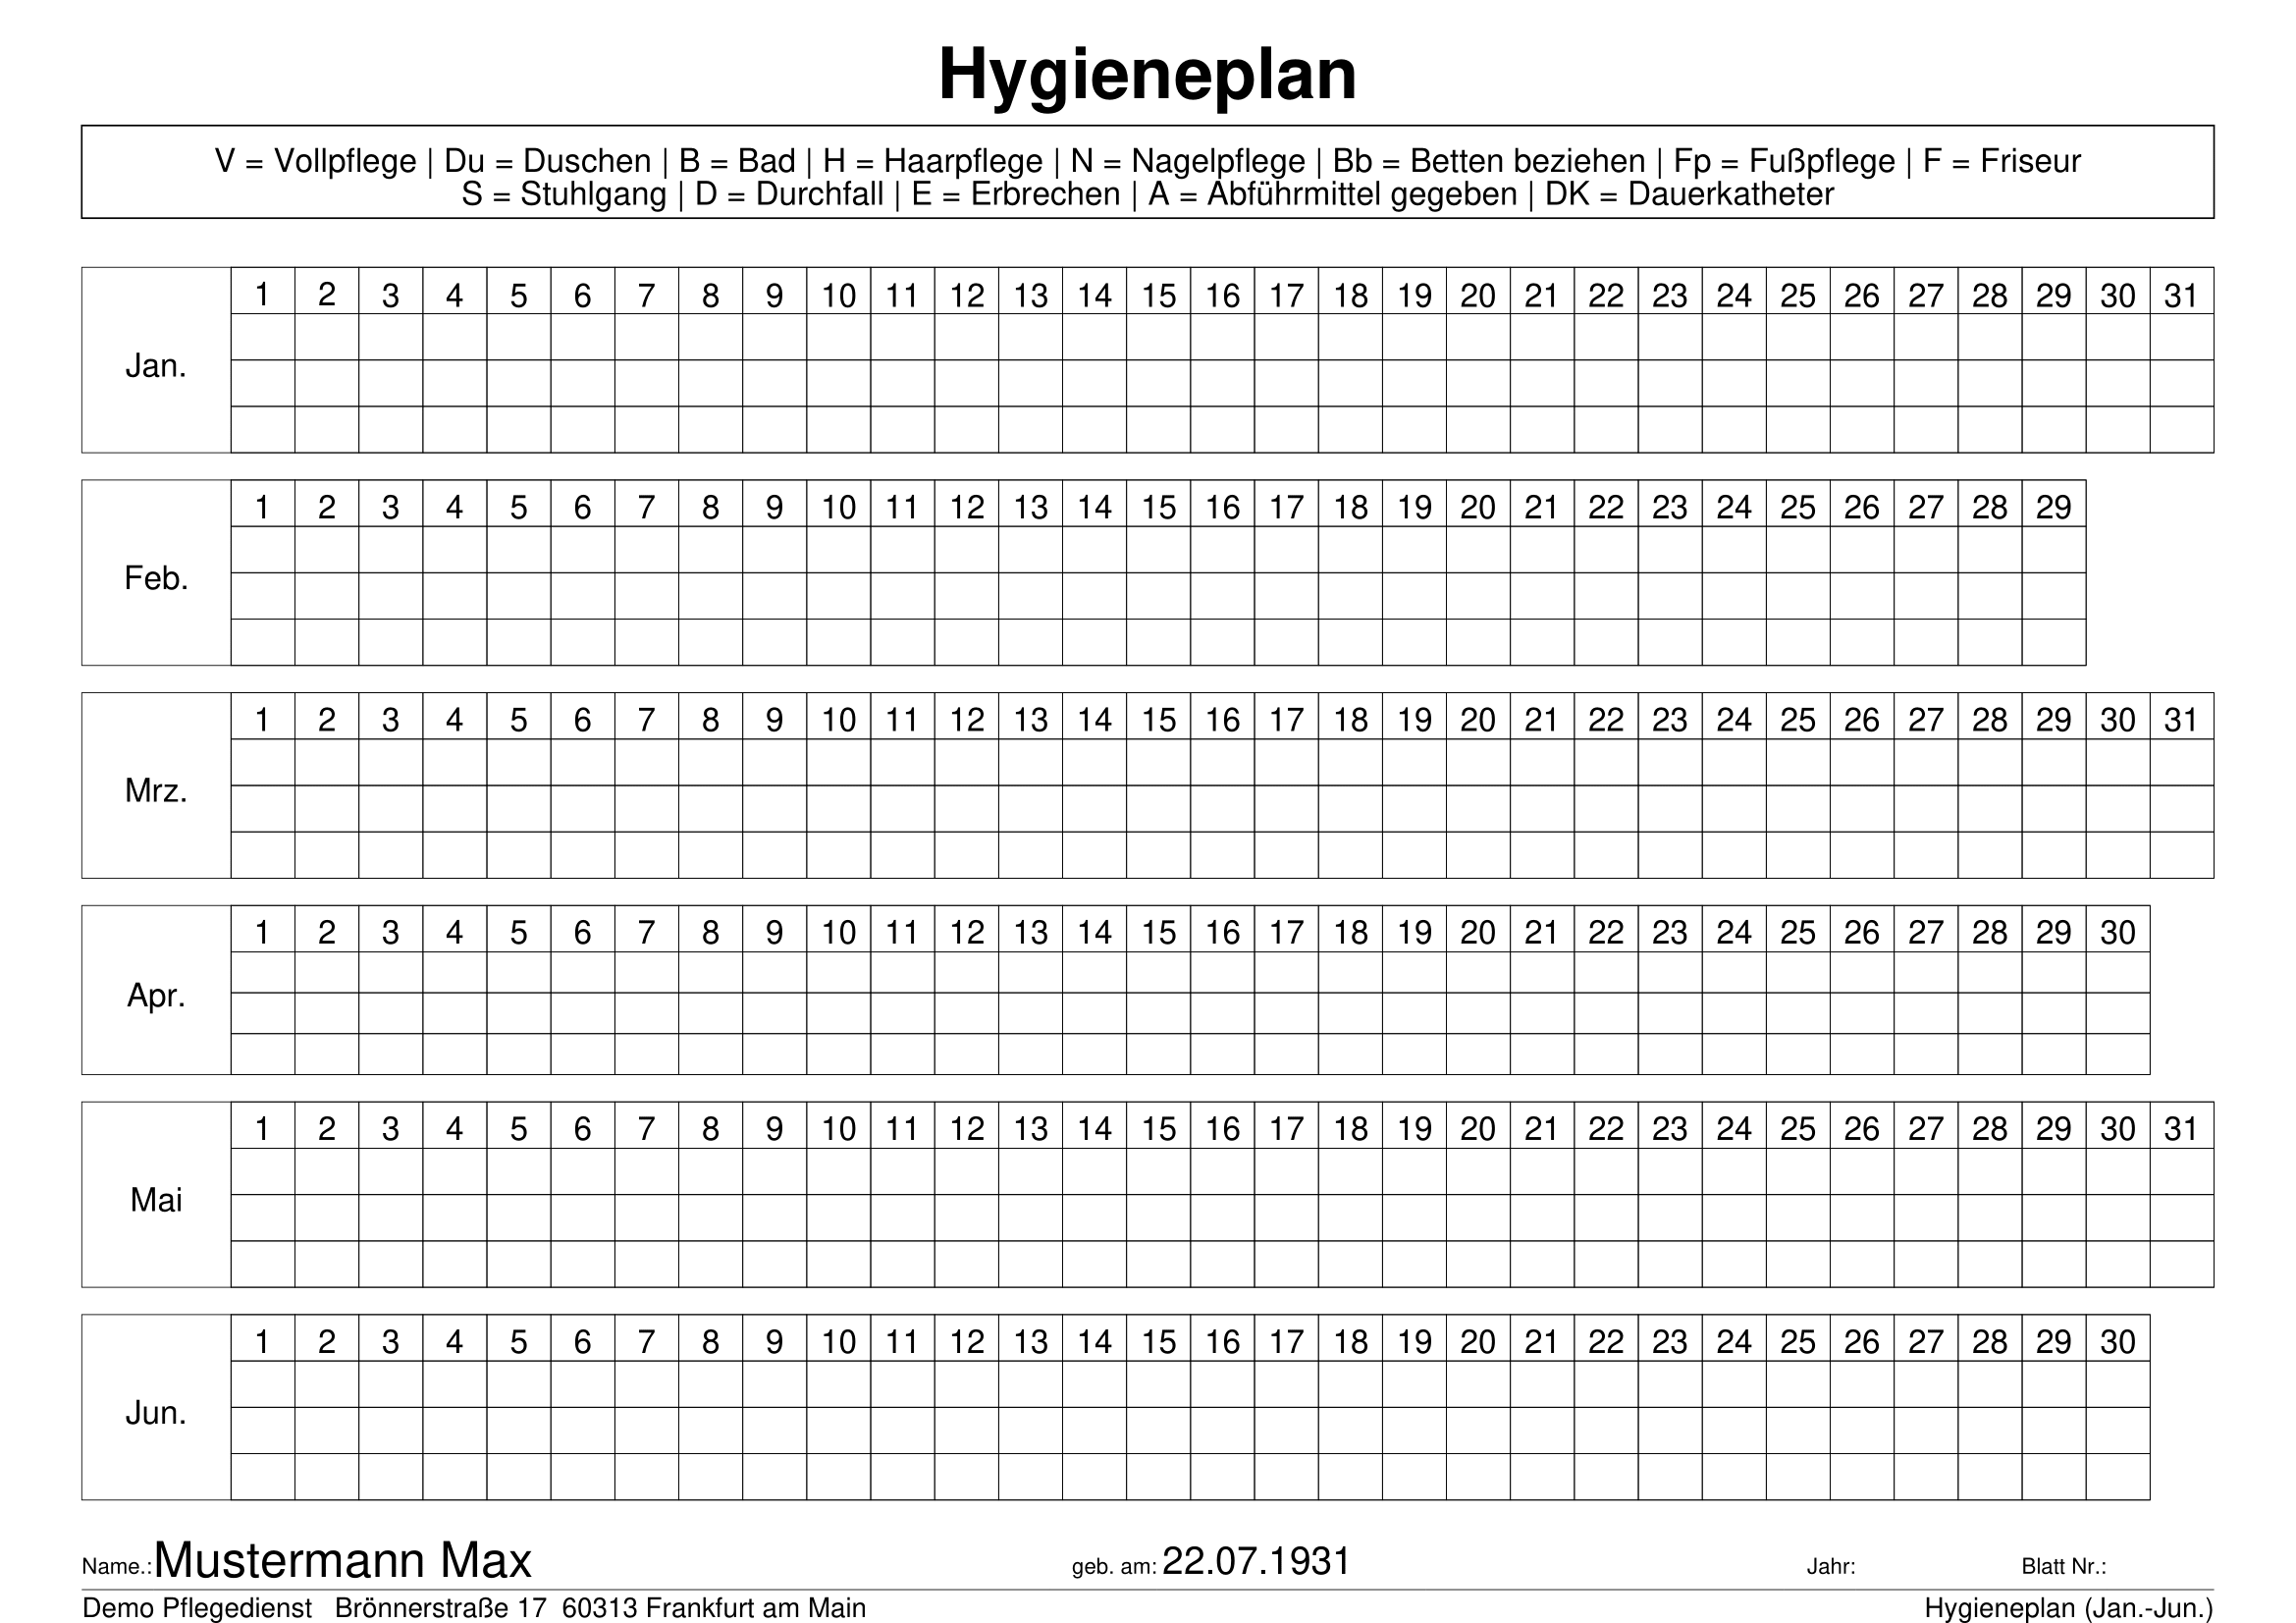 Hygieneplan Jan-Jun